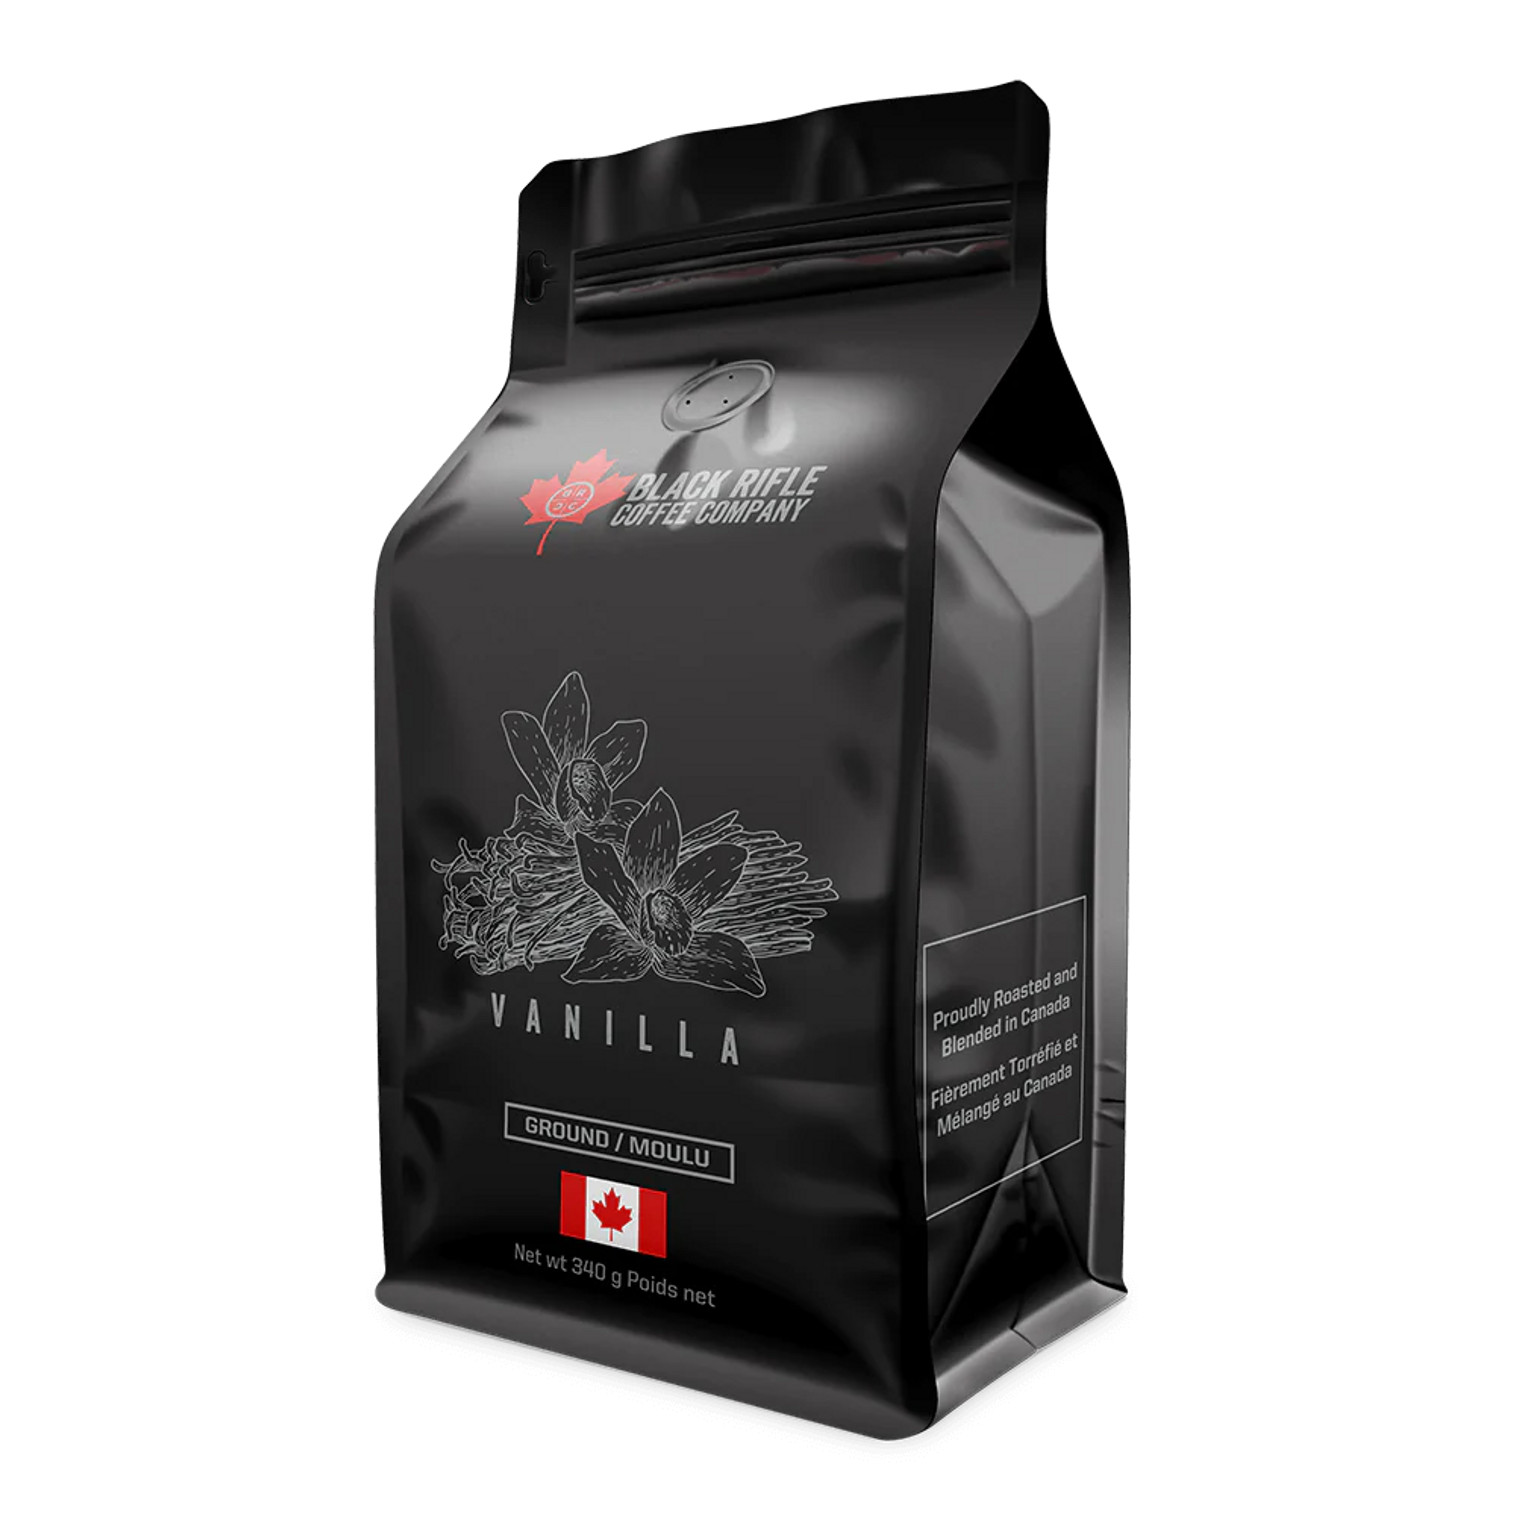 Black Rifle Coffee Company - Vanilla 